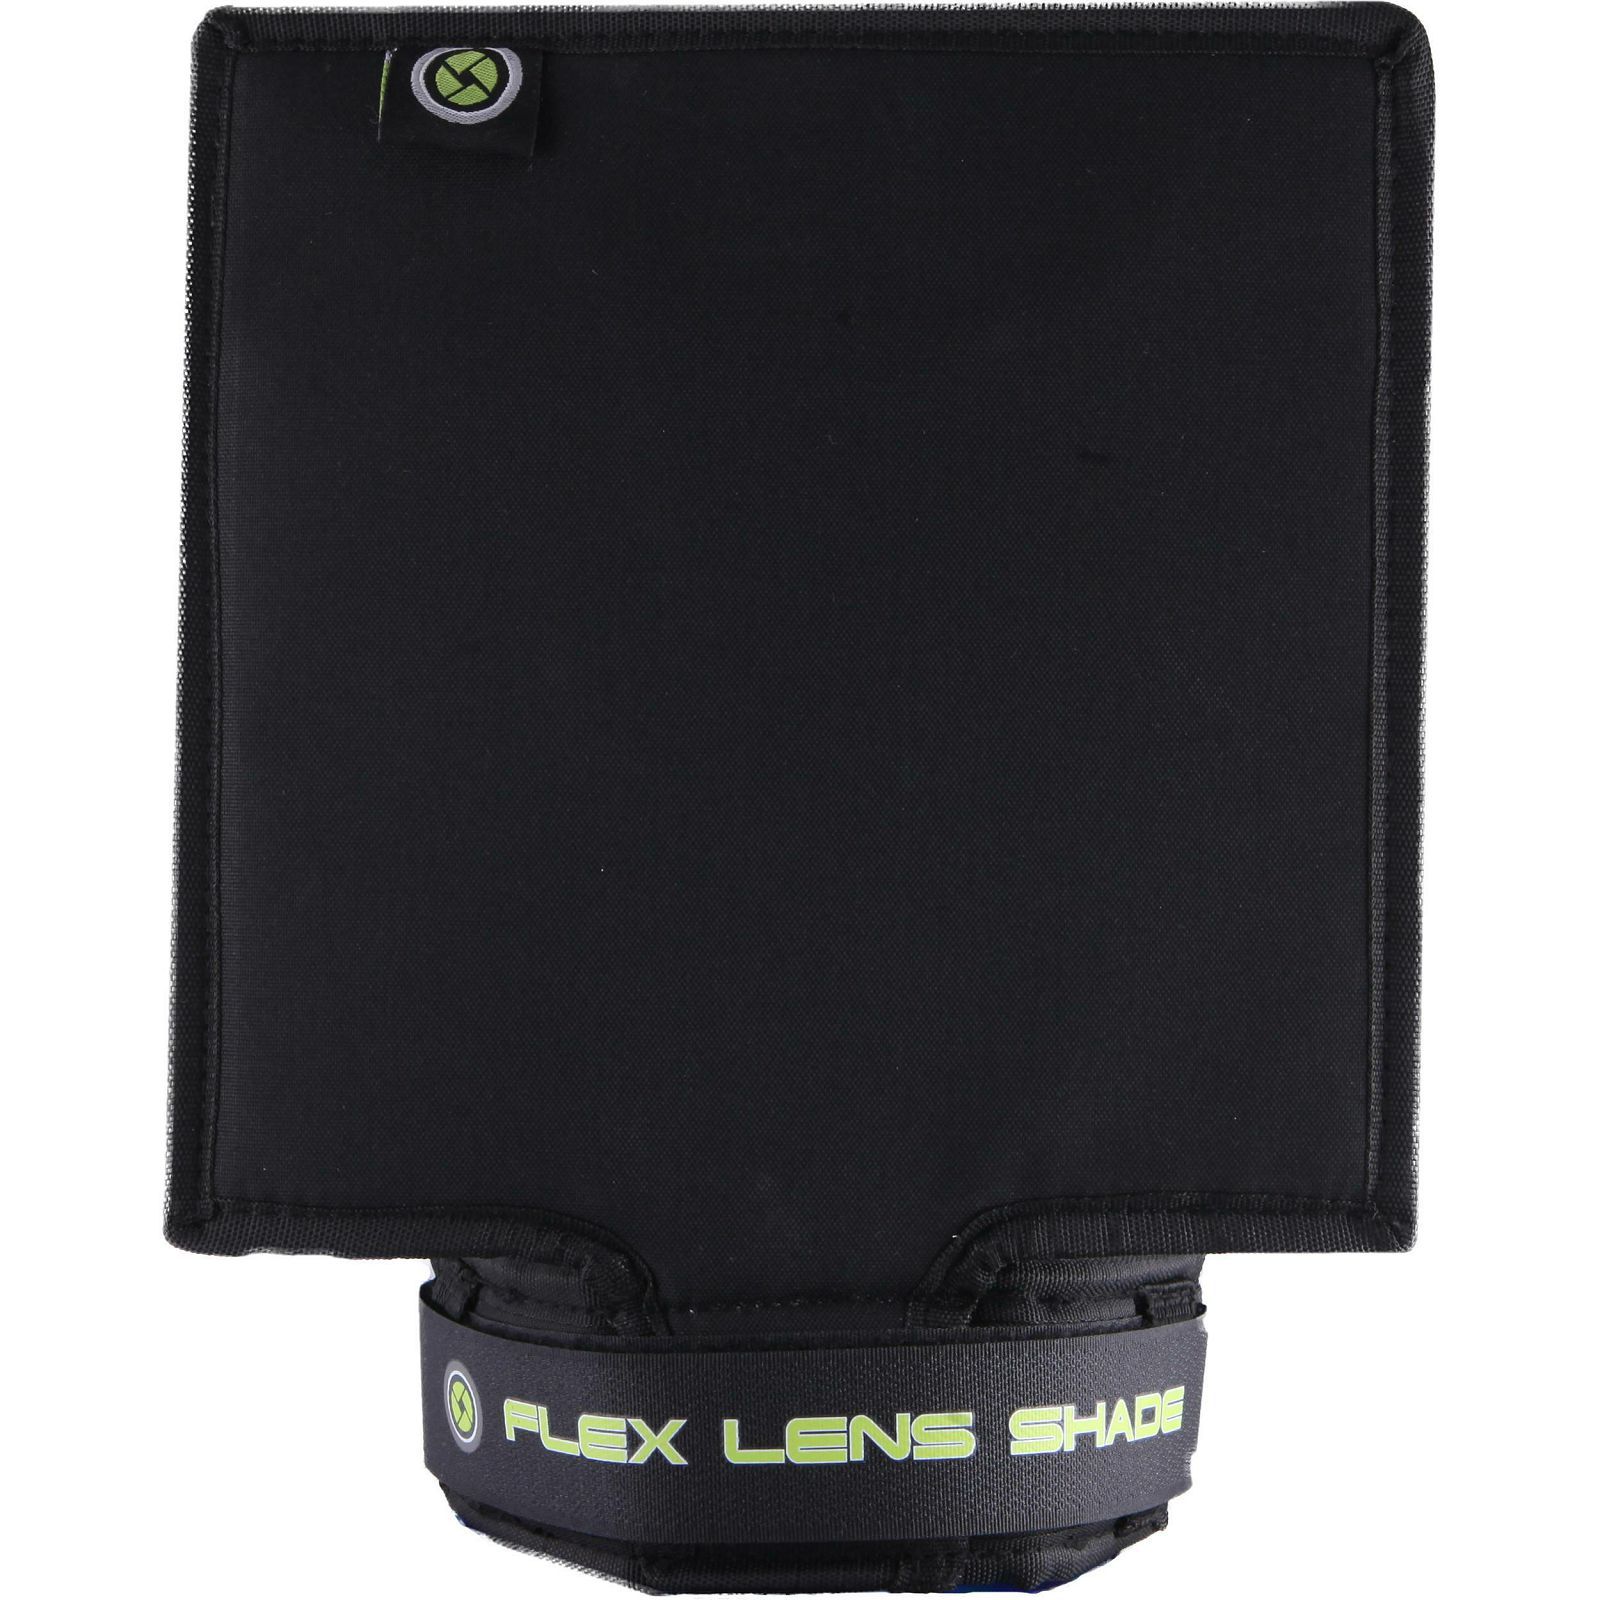 Discovered easyCover Flex lens shade large Black fleksibilno sjenilo za objektiv (L1)